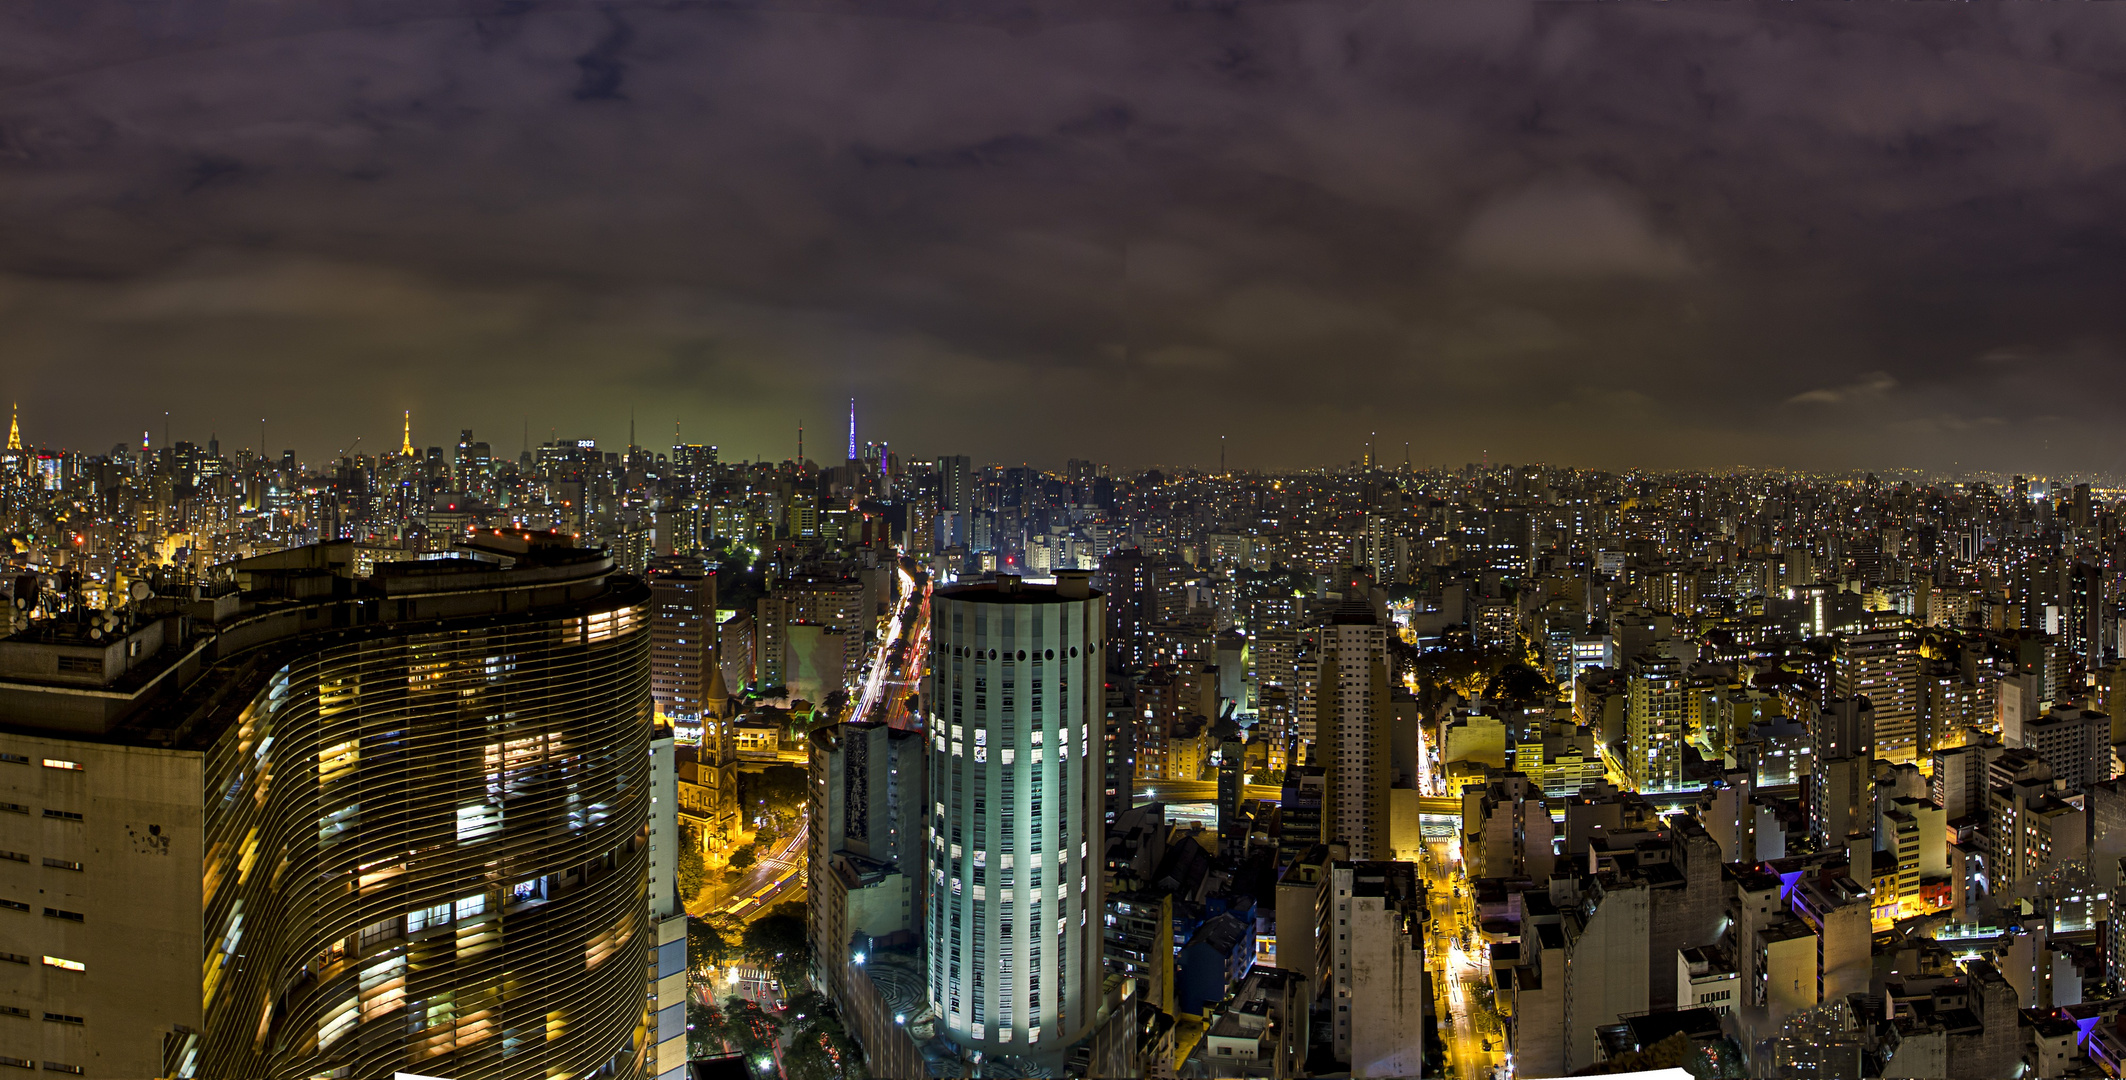 Sao Paolo at Night